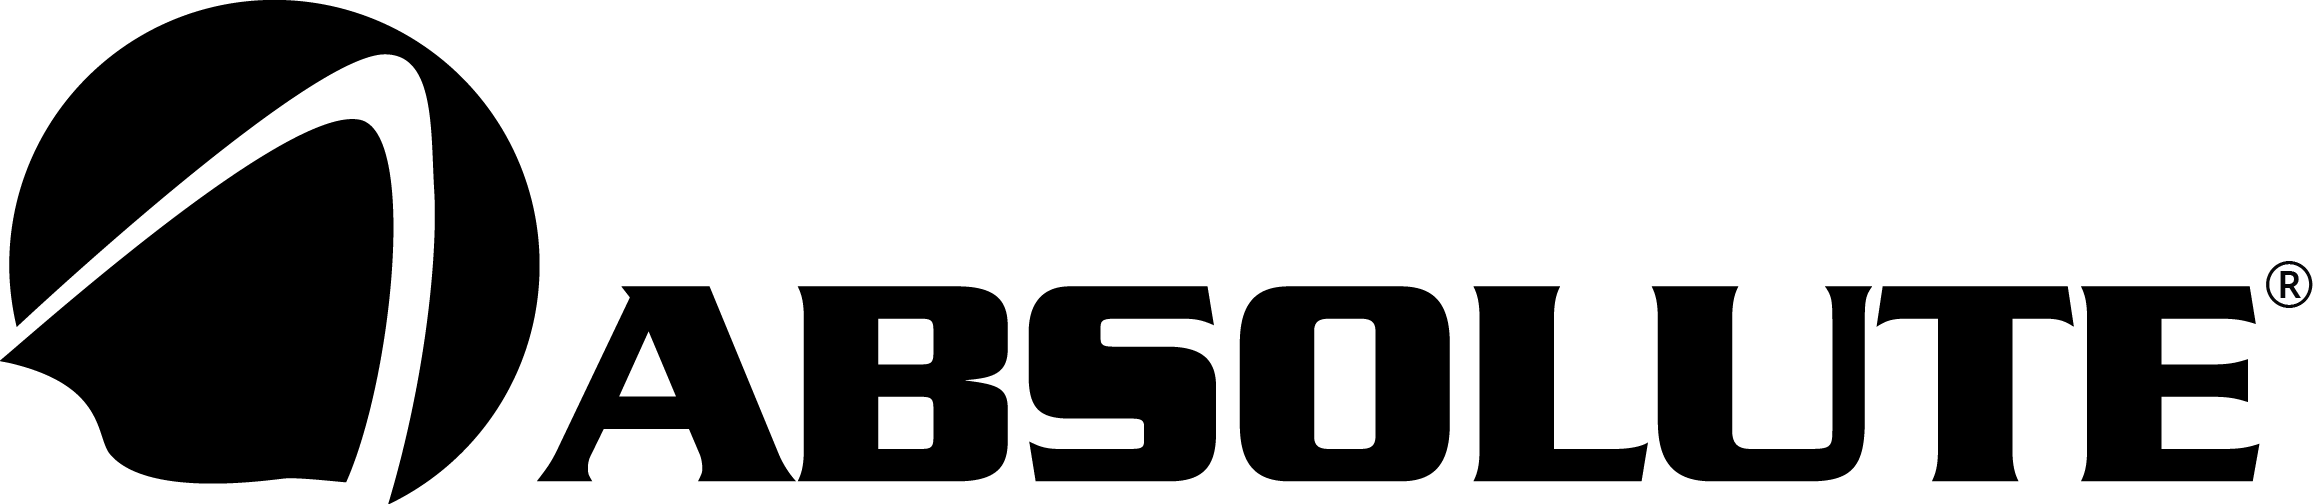 Absolute logo